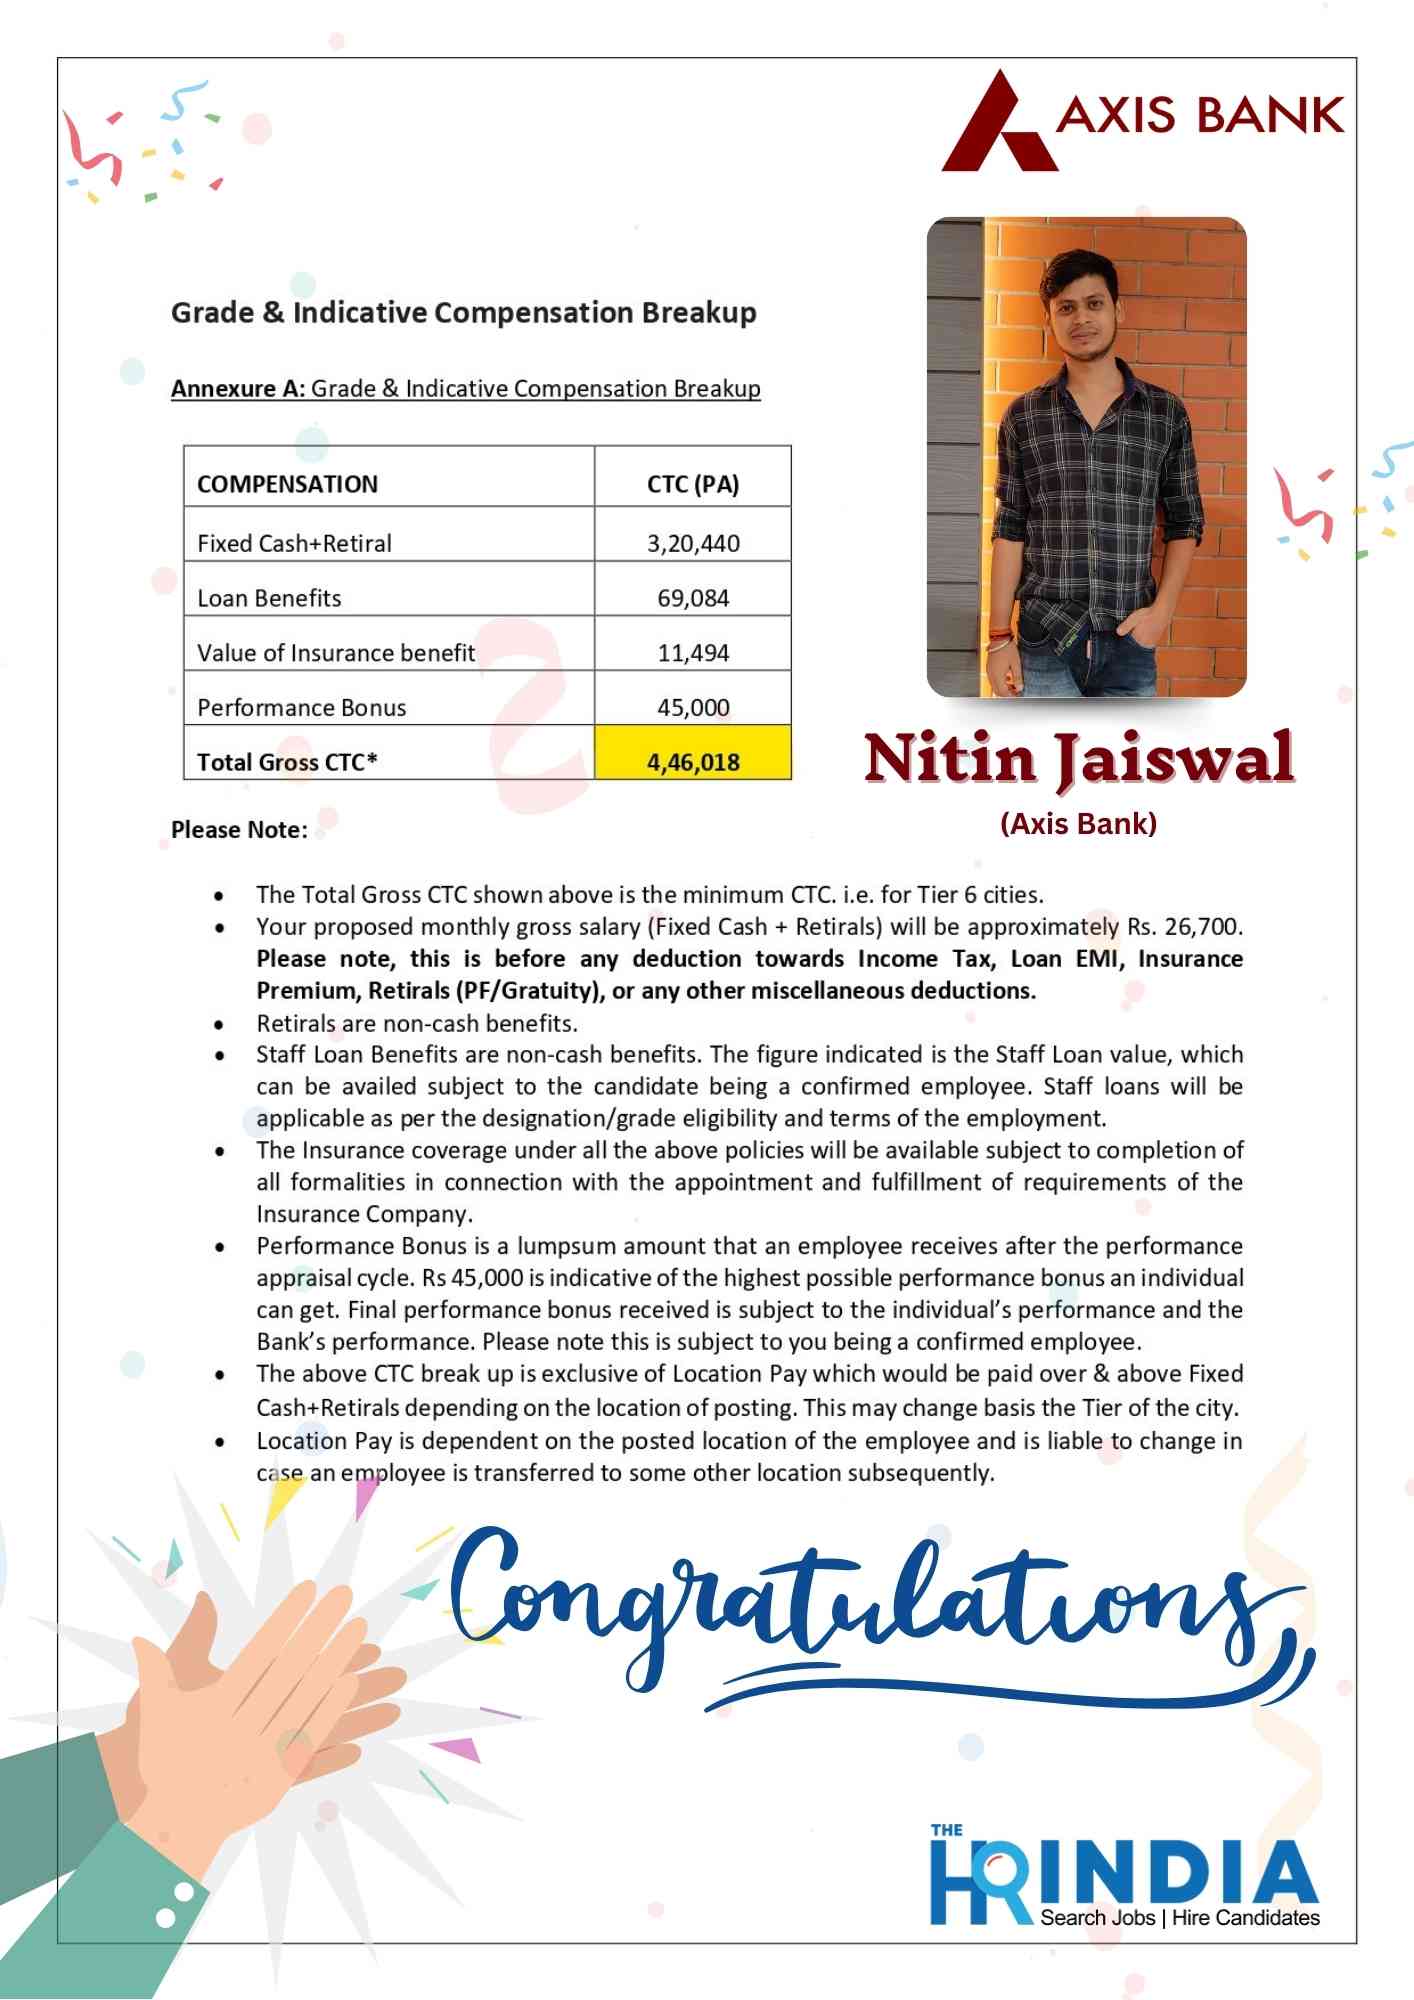 Nitin Jaiswal  | The HR India